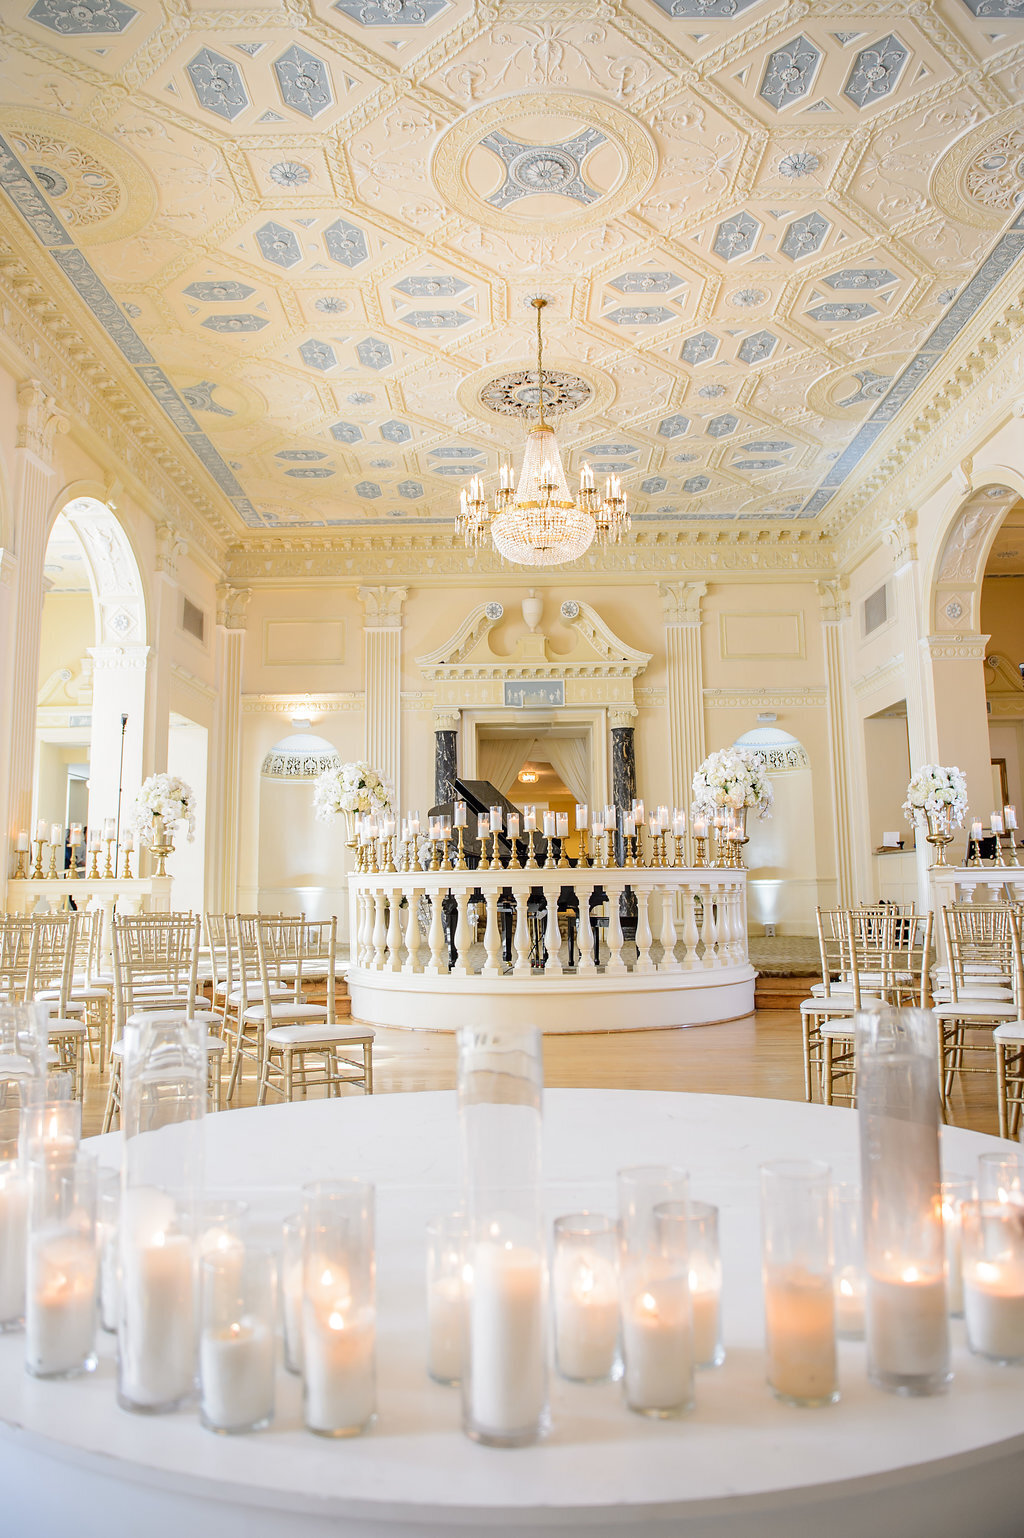 Biltmore-Imperial-Ballrooms-Wedding-Creating-Joy-Events-Co